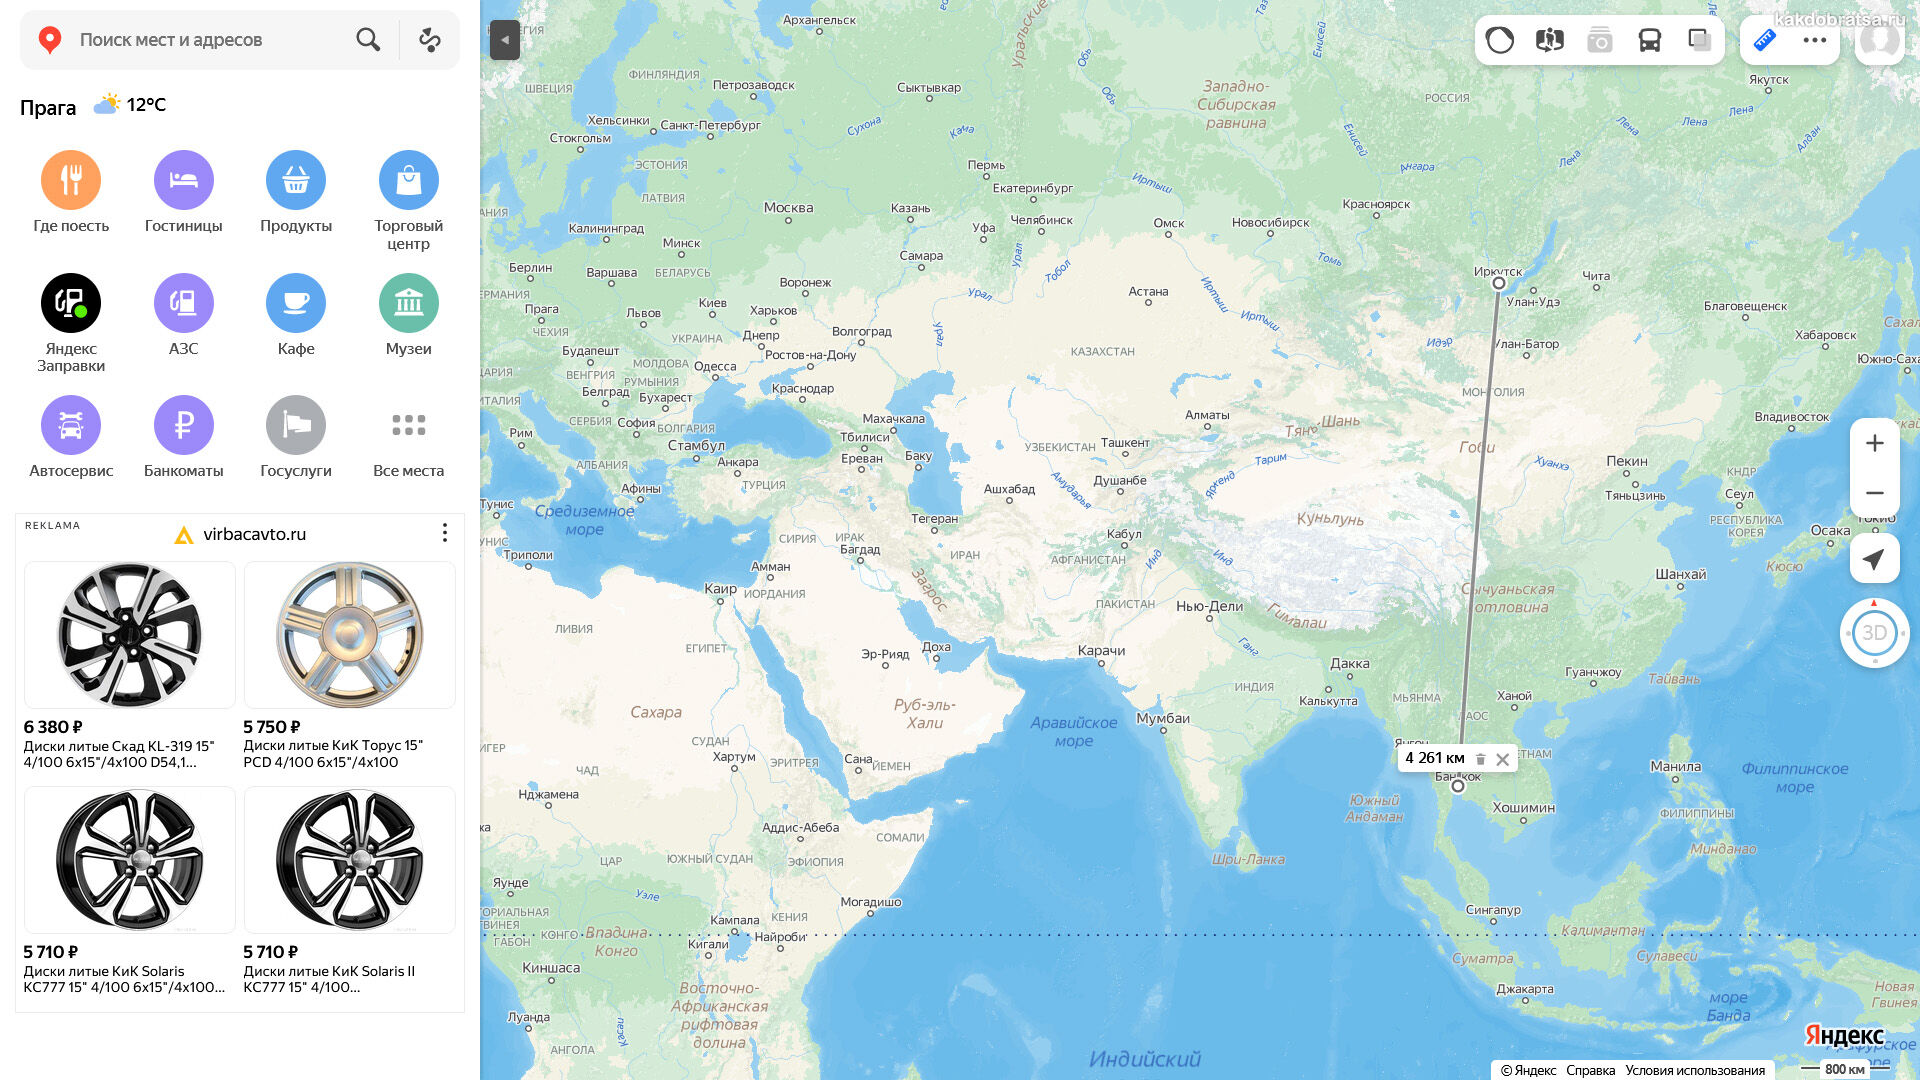 Иркутск бангкок аэрофлот. Самолет Иркутск Бангкок на карте. Иркутск Бангкок карта полета. Из Иркутска в Бангкок. Маршрут Иркутск Бангкок на карте.